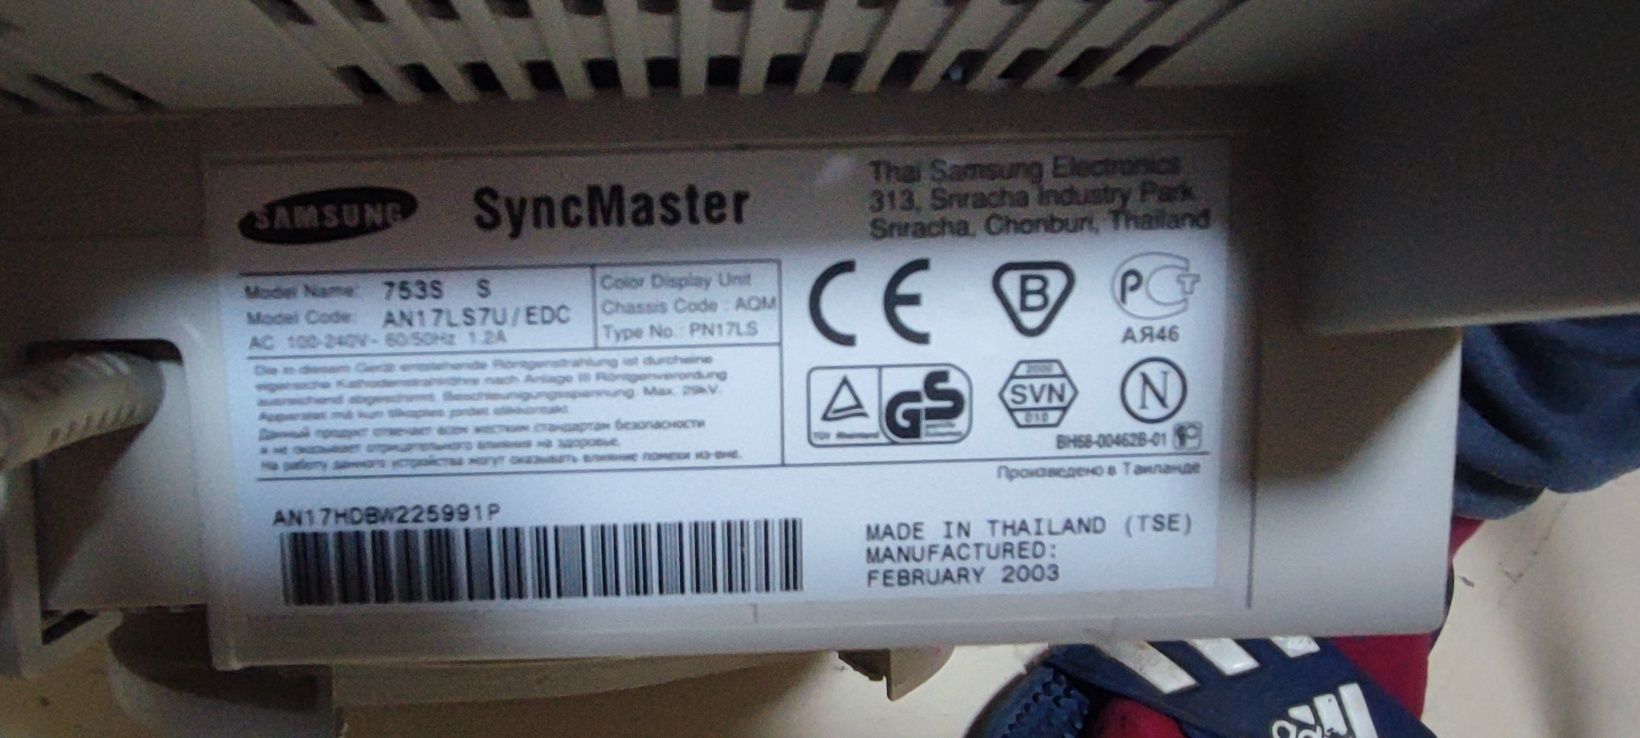 Monitor komputerowy CRT Samsung syncmaster 735s